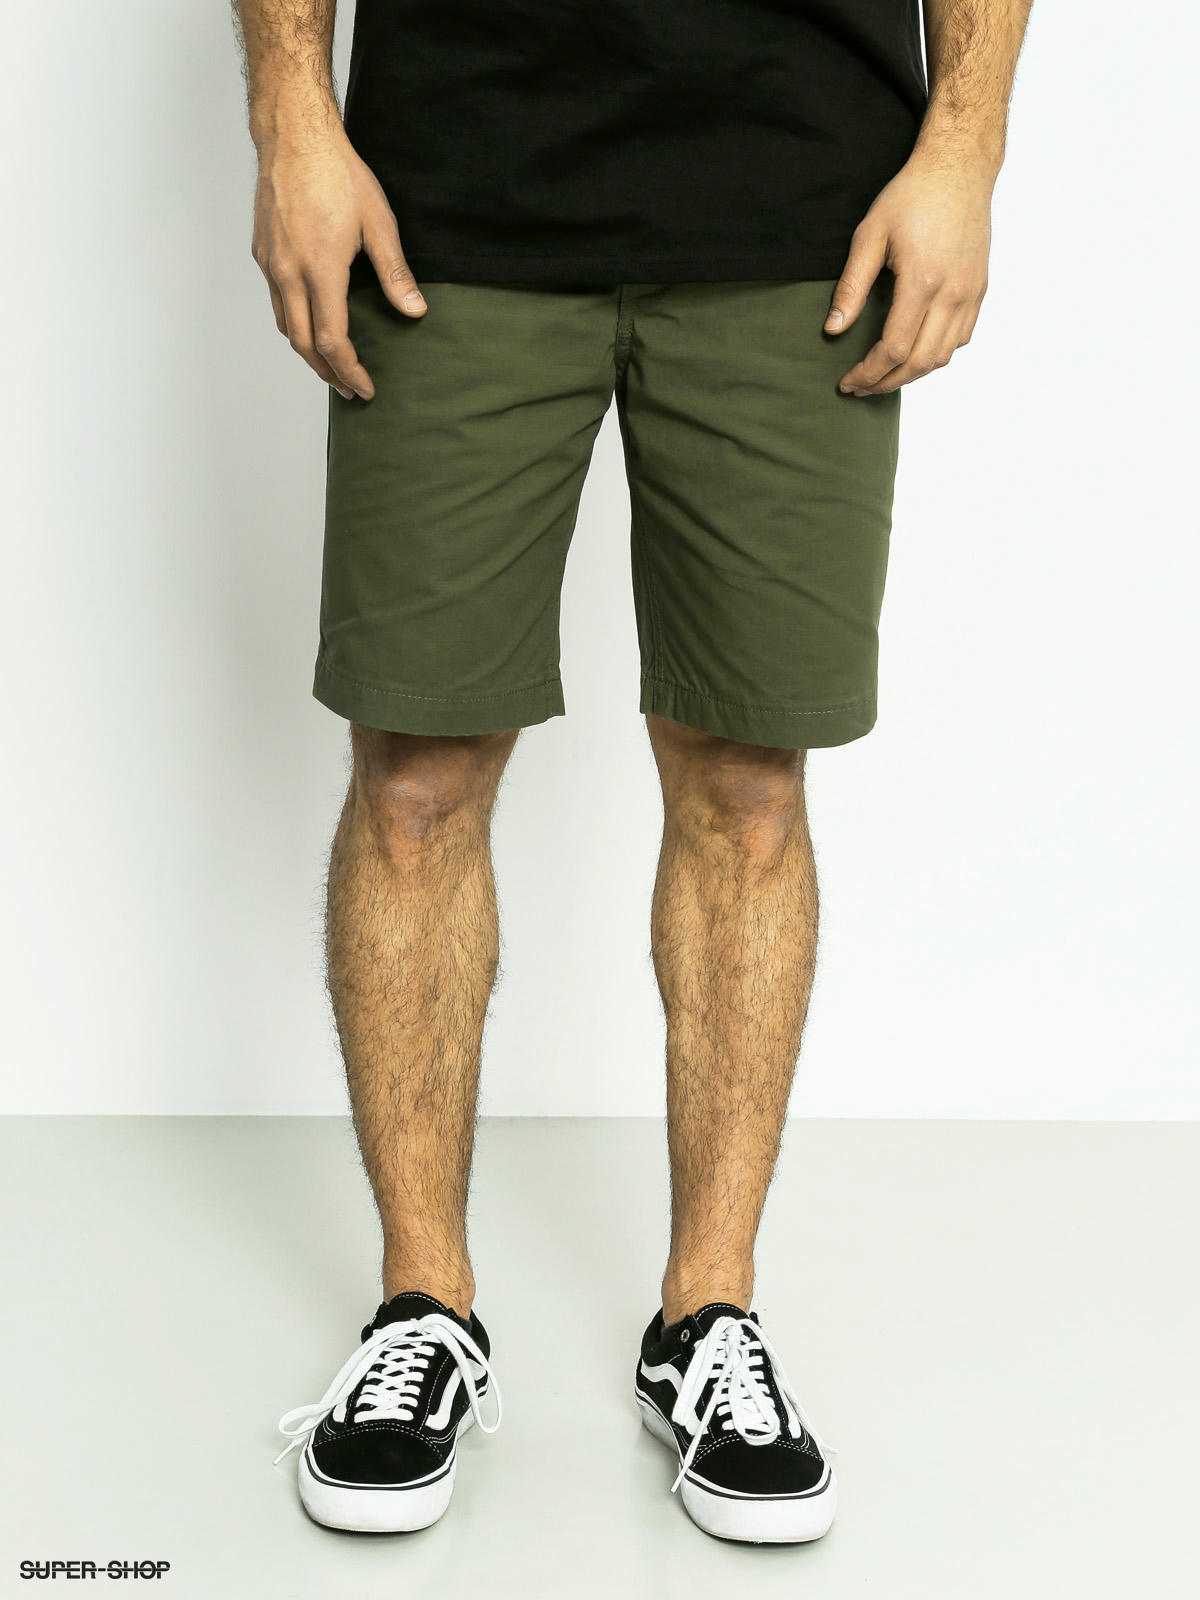 green levi shorts